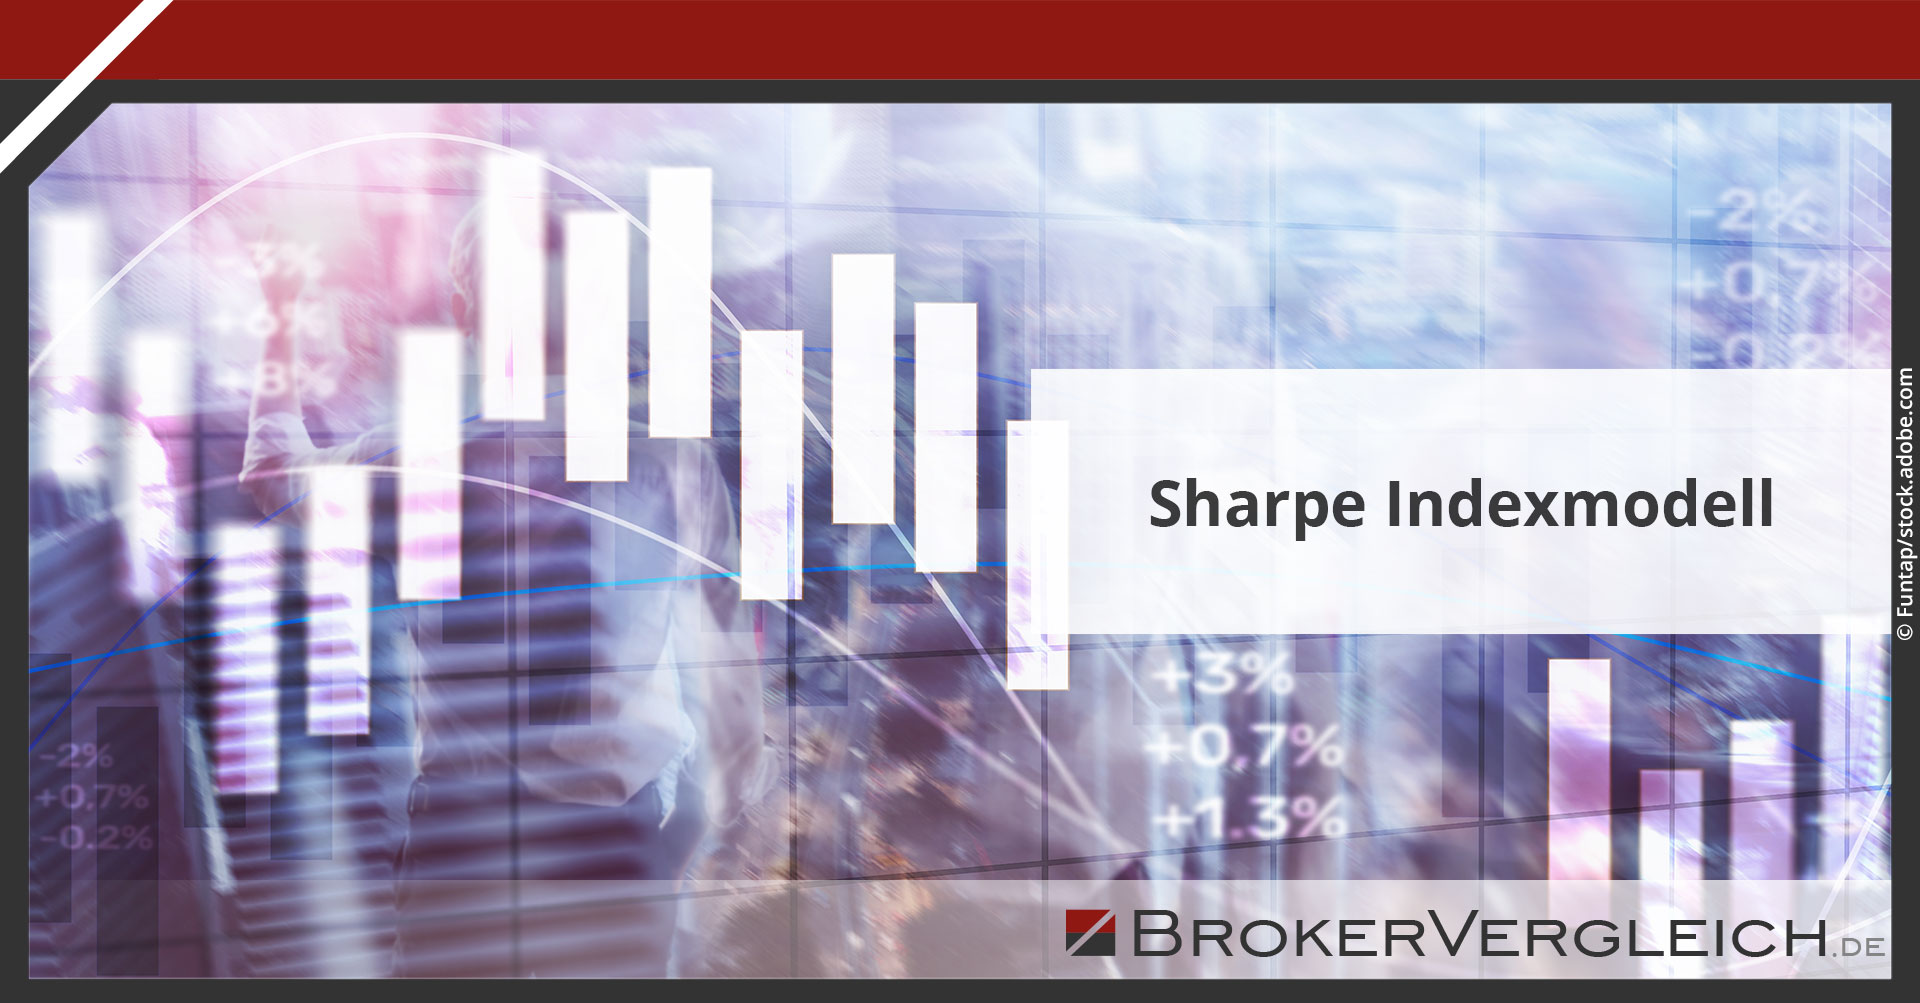 Sharpe Indexmodell